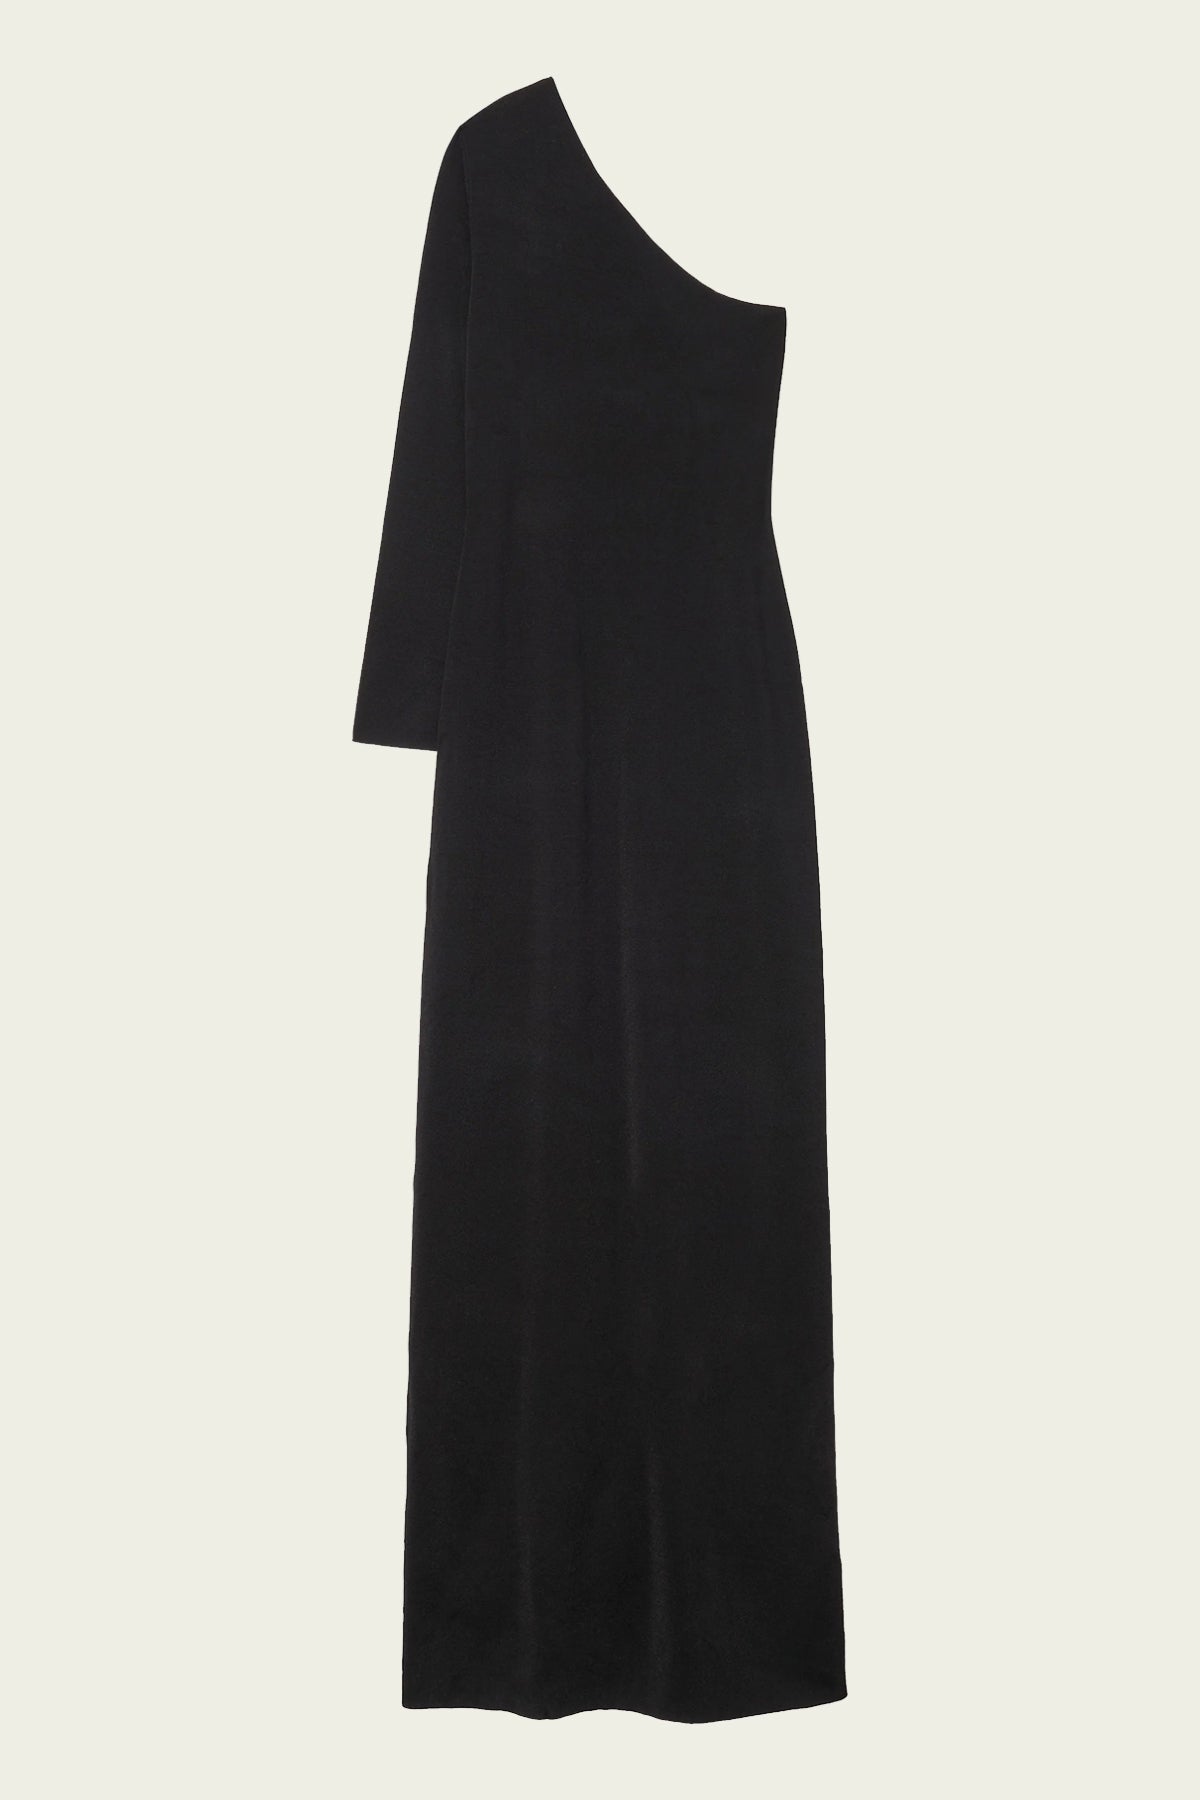 Ranni Dress in Black - shop-olivia.com